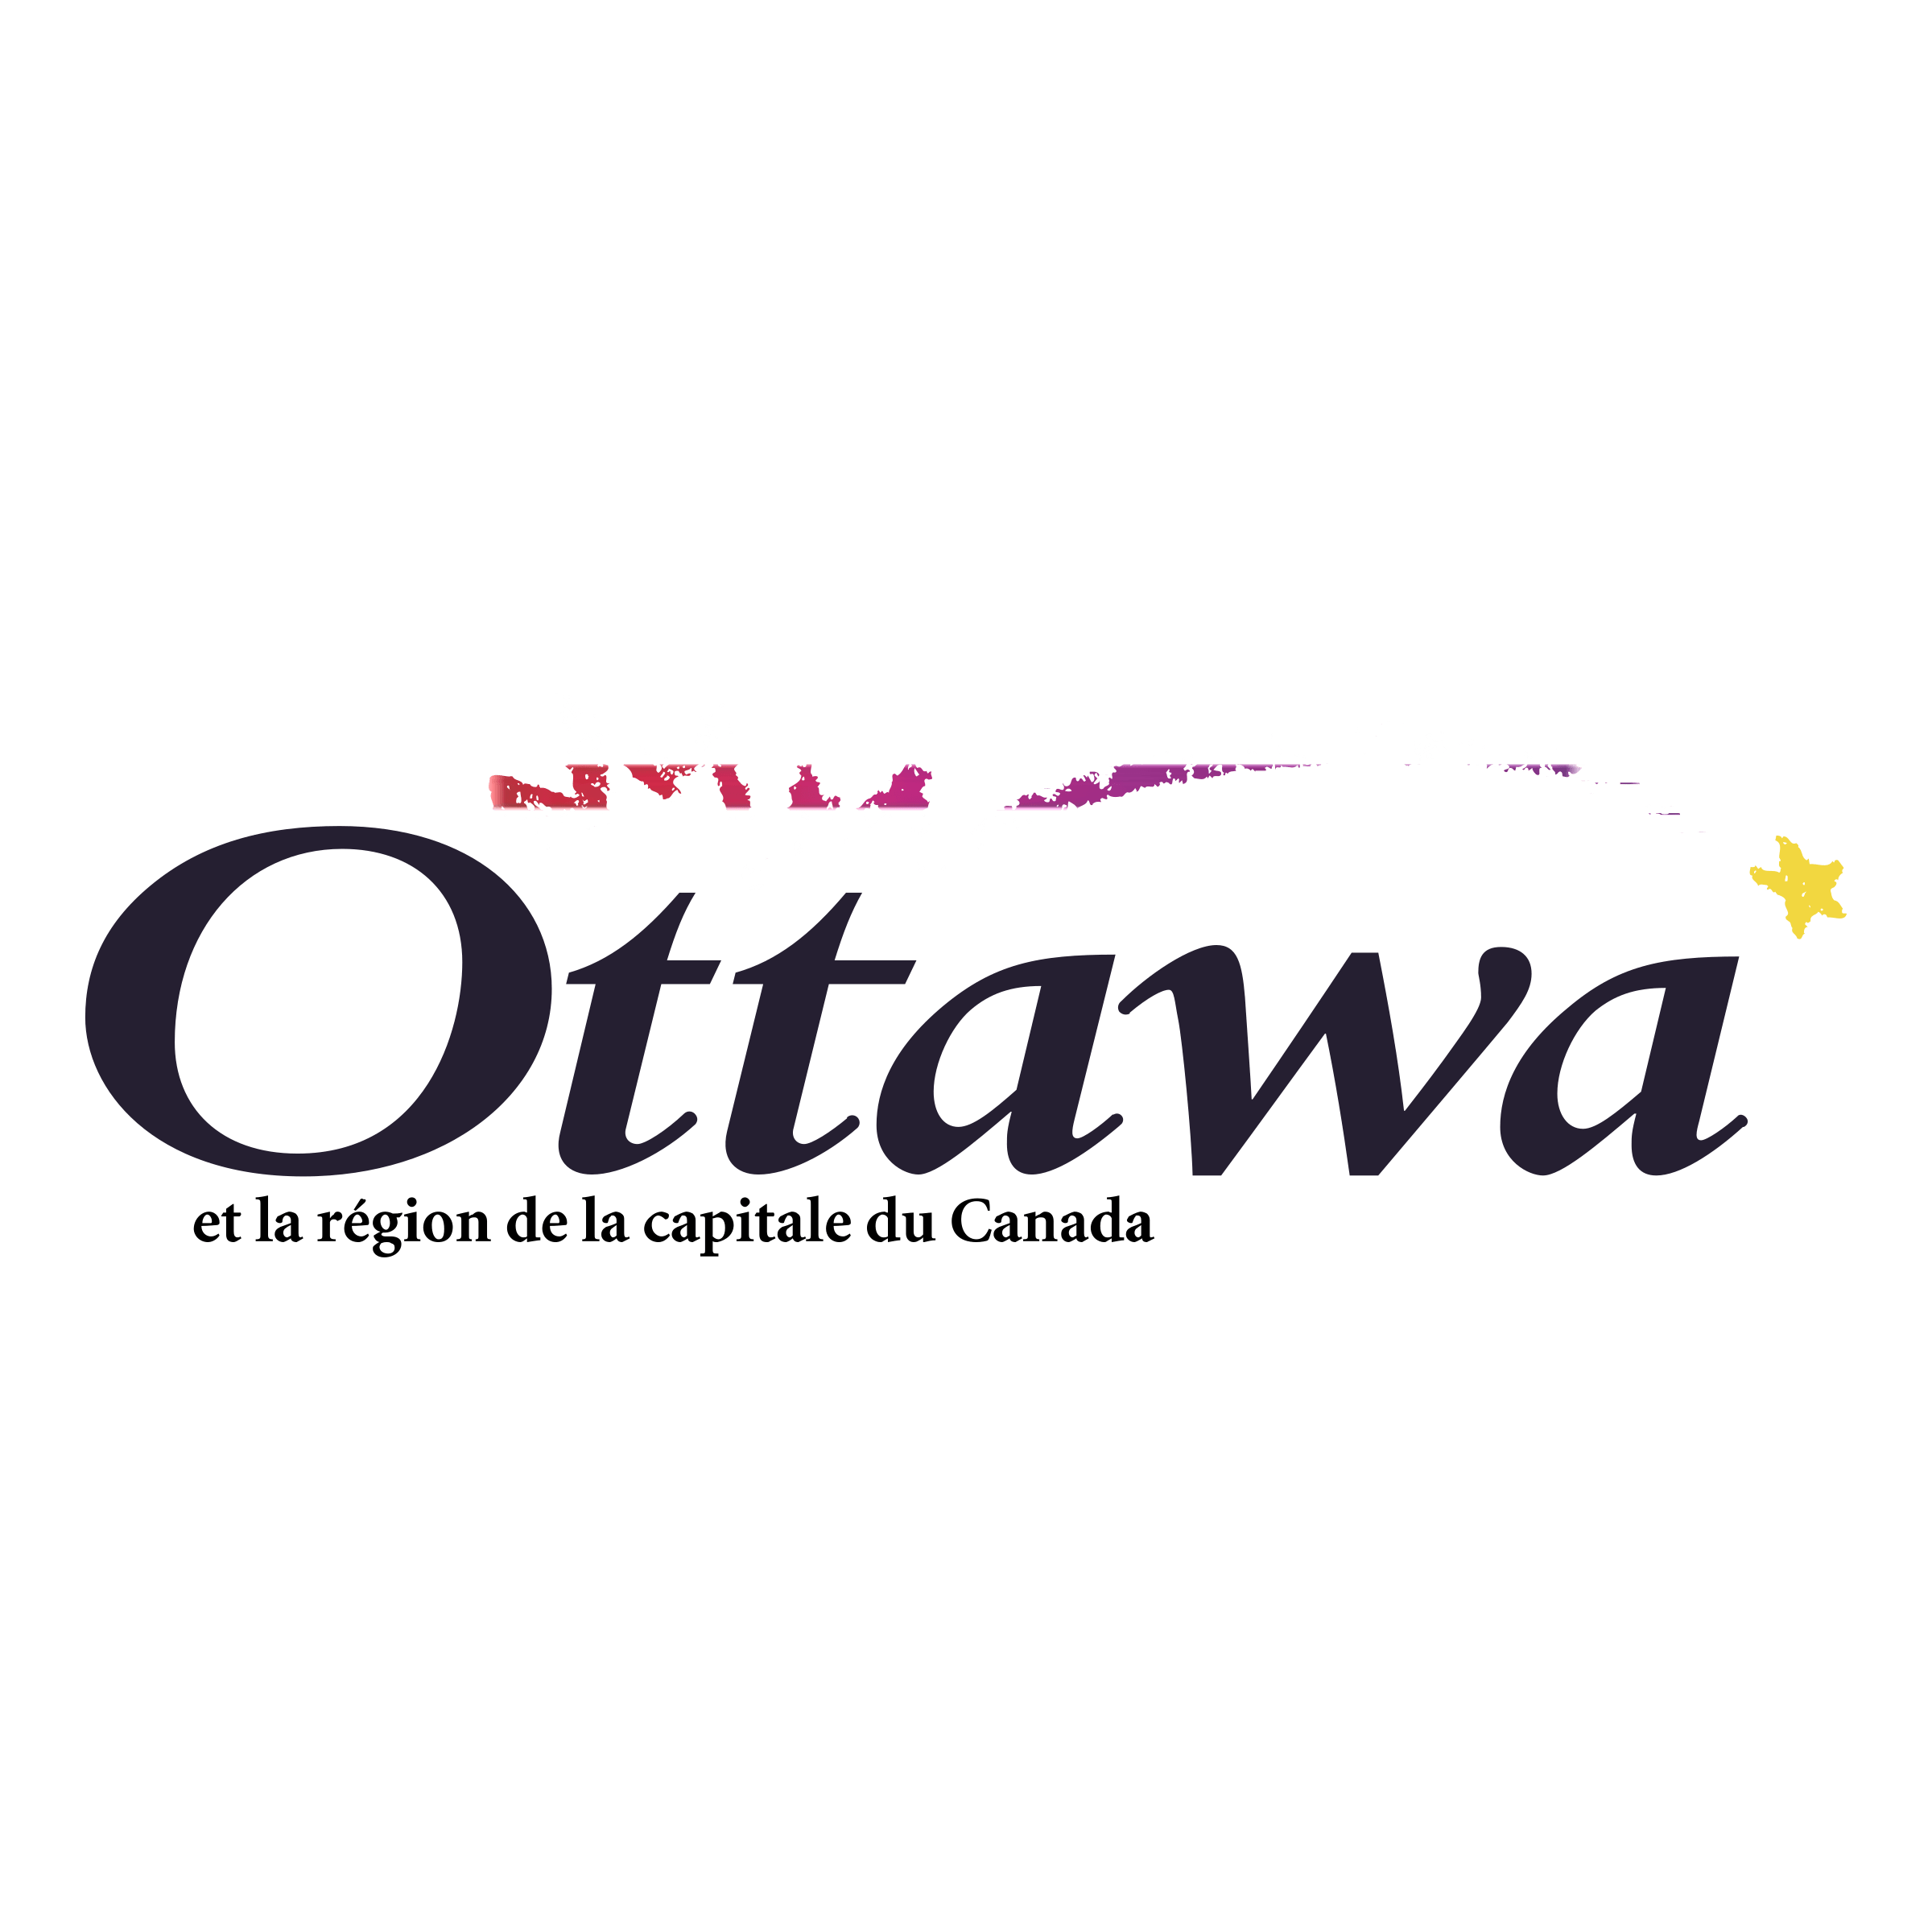 Ottawa Logo - Ottawa Logo PNG Transparent & SVG Vector - Freebie Supply